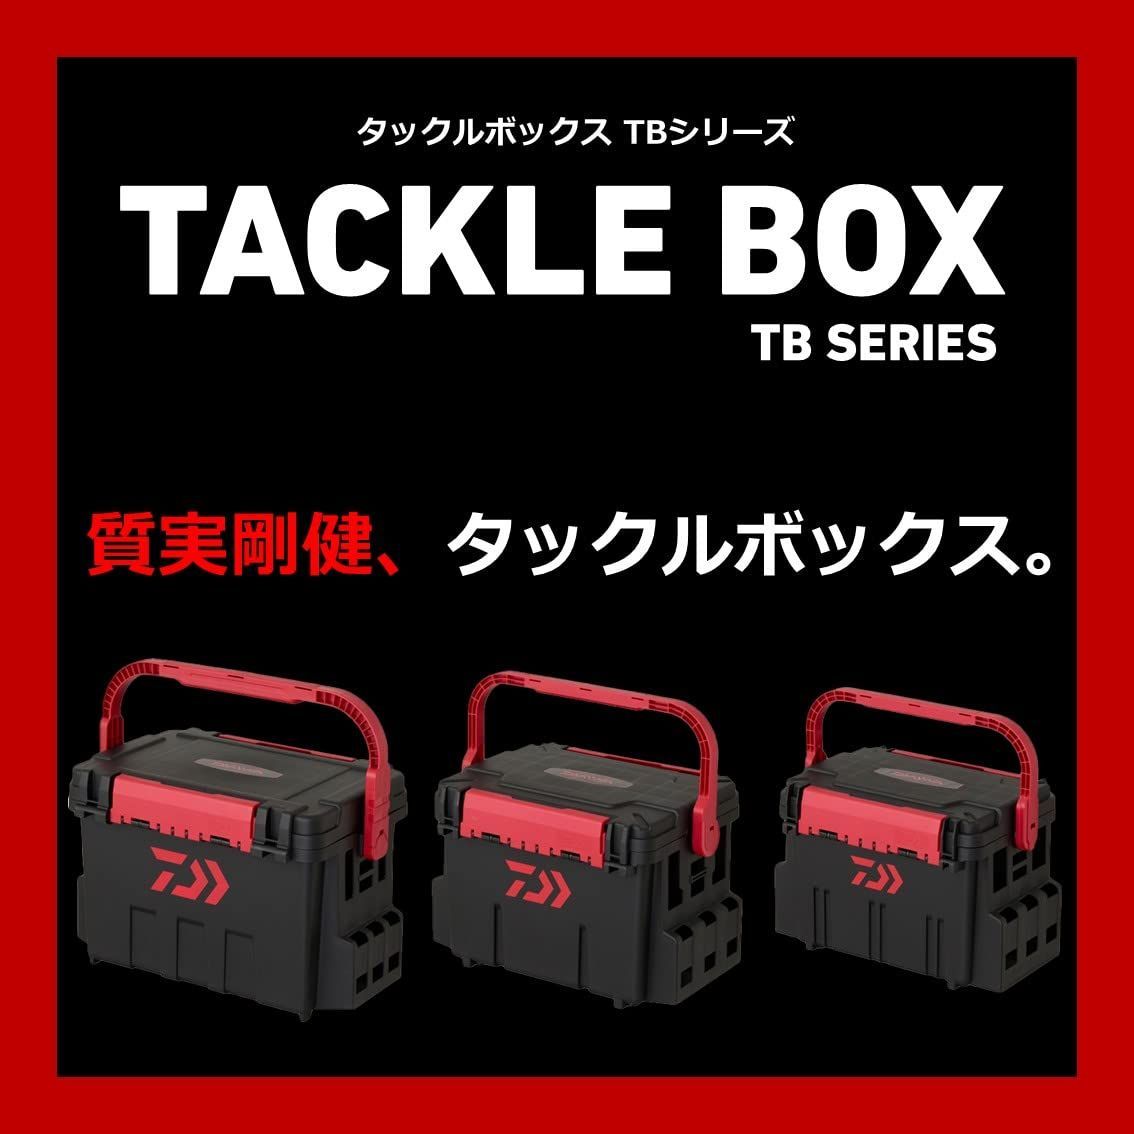 Daiwa TB4000 Tackle Box –  Outdoor Equipment